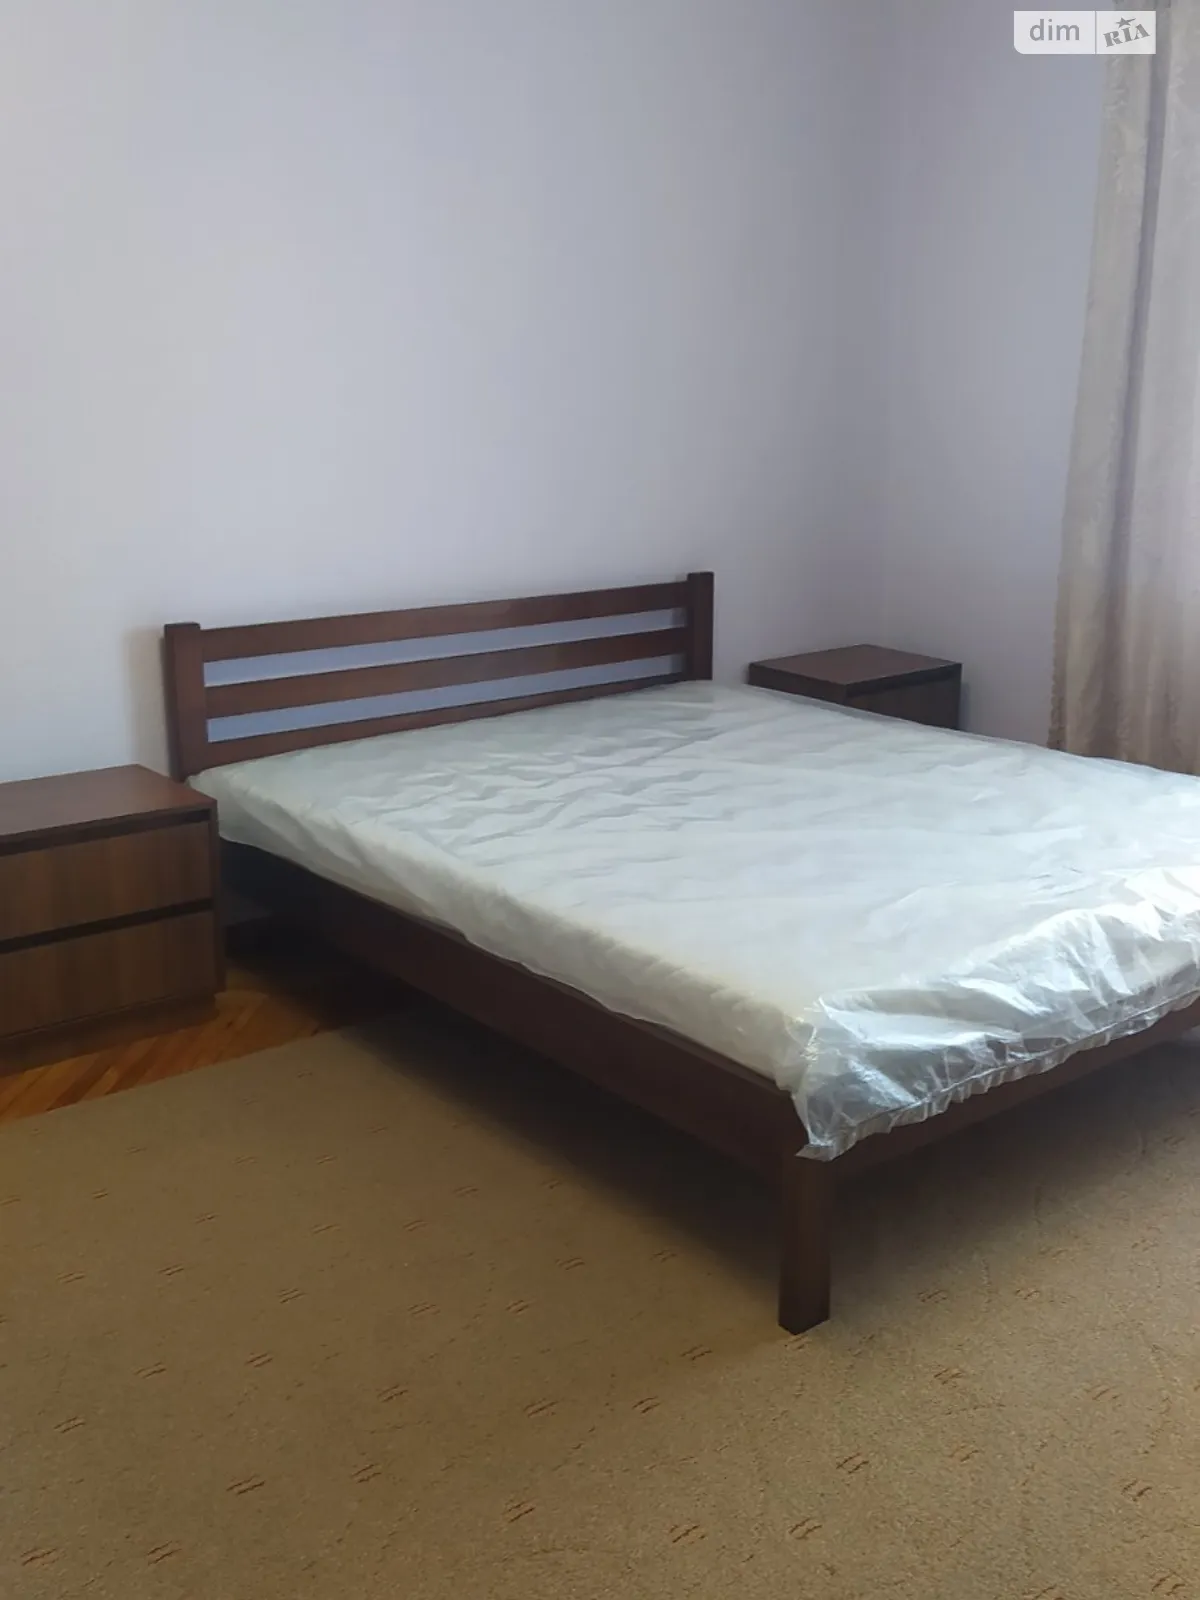 1-кімнатна квартира 45 кв. м у Луцьку, цена: 11000 грн